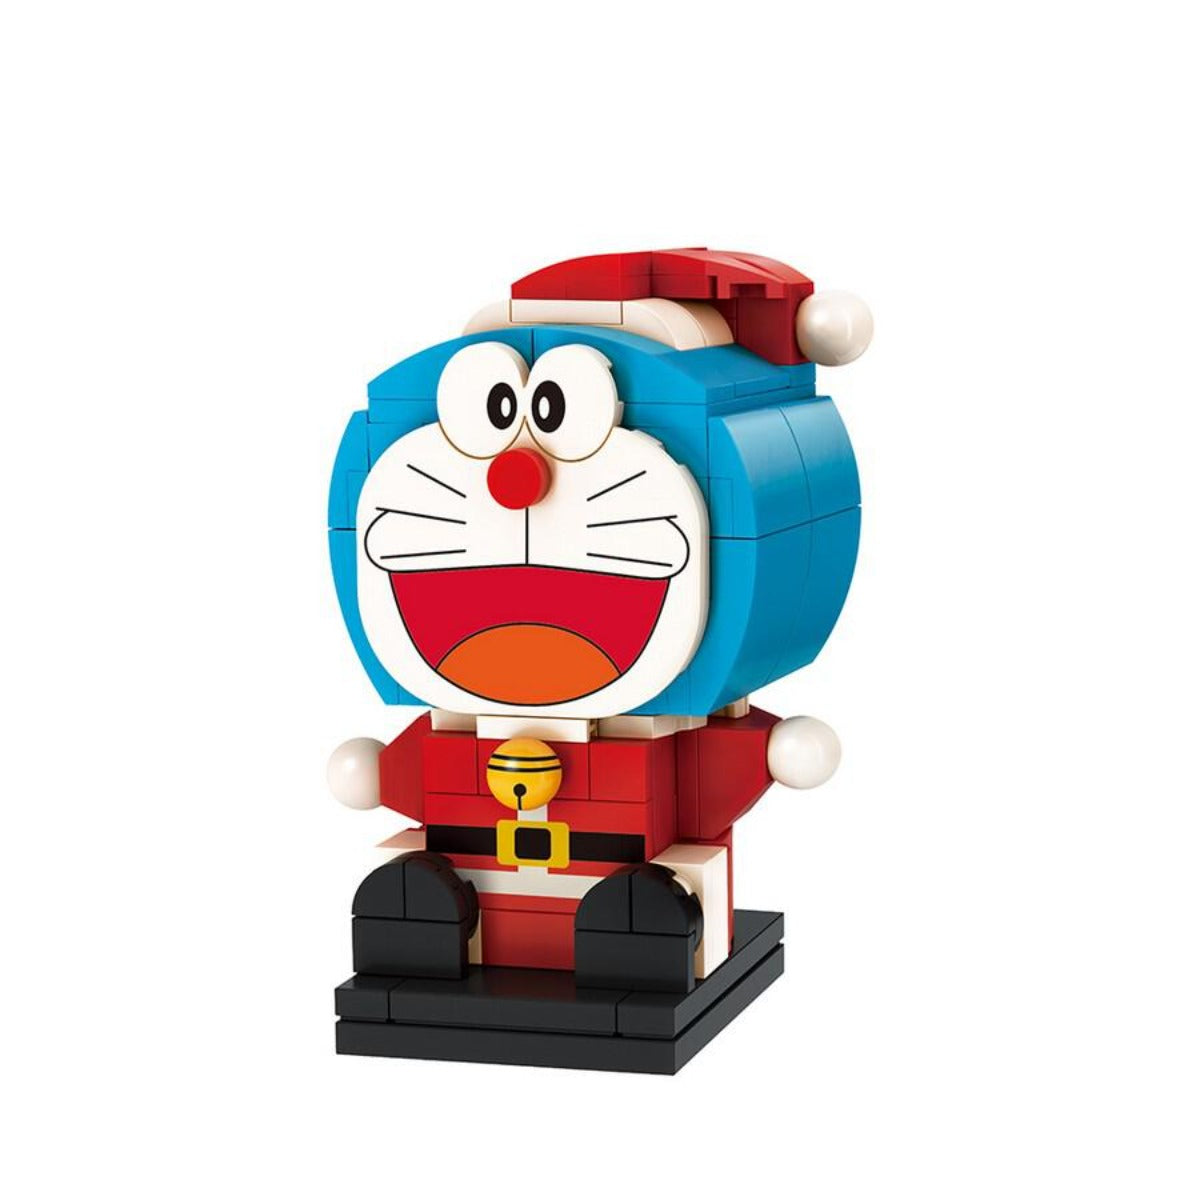 iBlock - Doraemon Santa 143pcs